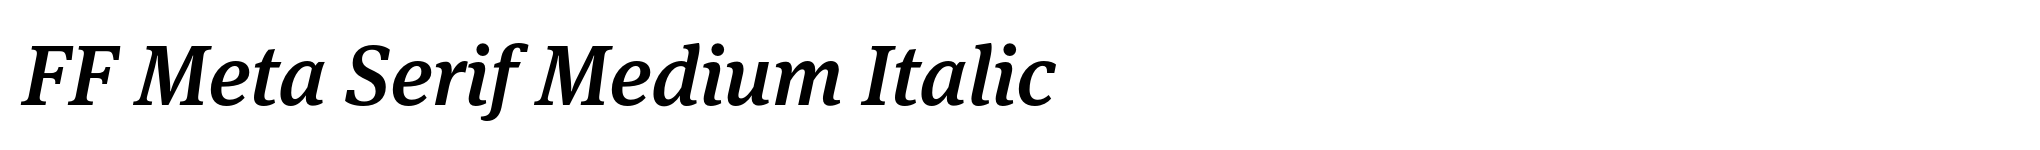 FF Meta Serif Medium Italic image